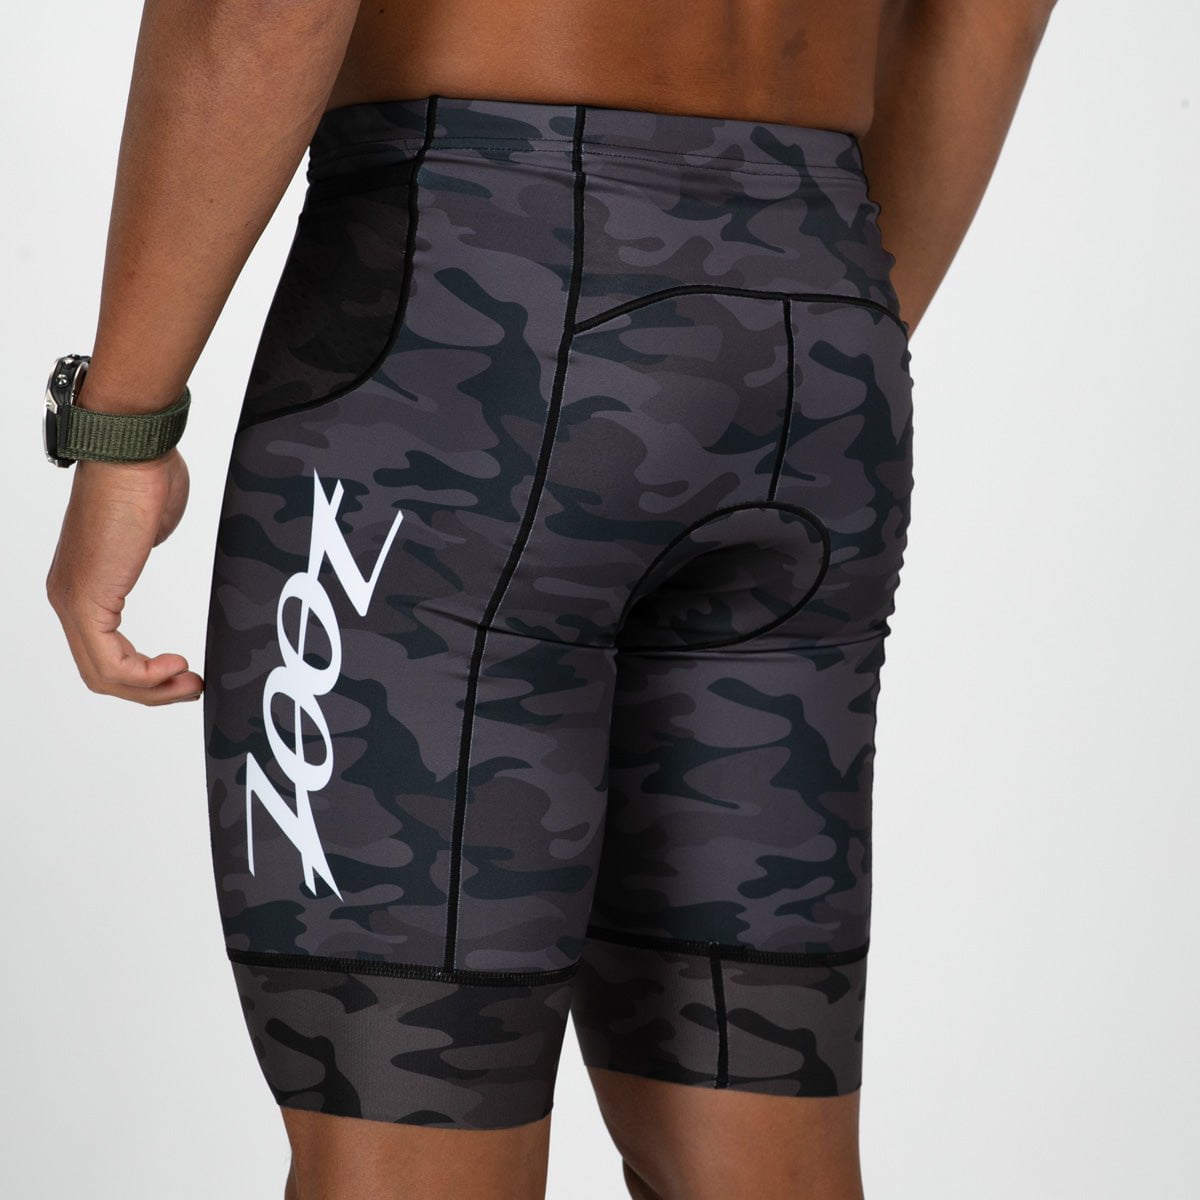 Zoot Sports TRI SHORTS Men's Ltd Tri 9" Short - Camouflage